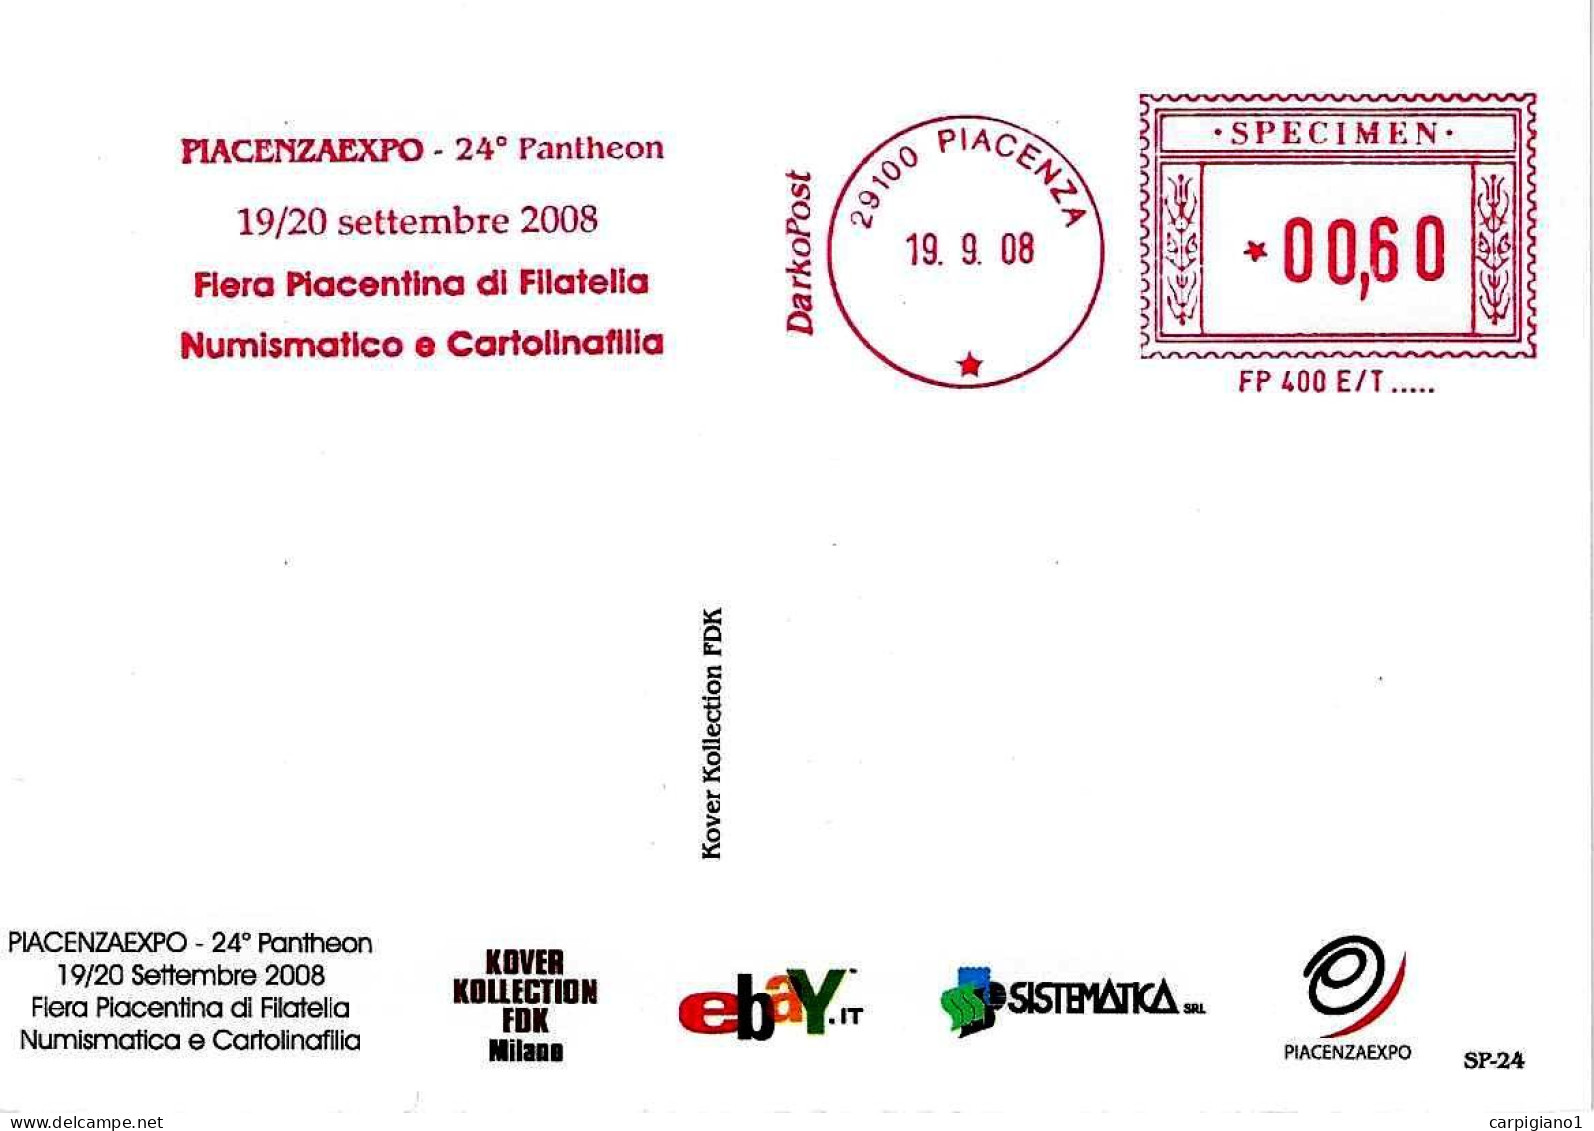 ITALIA - 2008 PIACENZA 24° Pantheon Piacenzaexpo Fiera Filatelia - Ema Affrancatura Mecc. Rossa Red Meter SPECIMEN - 653 - 2001-10: Storia Postale